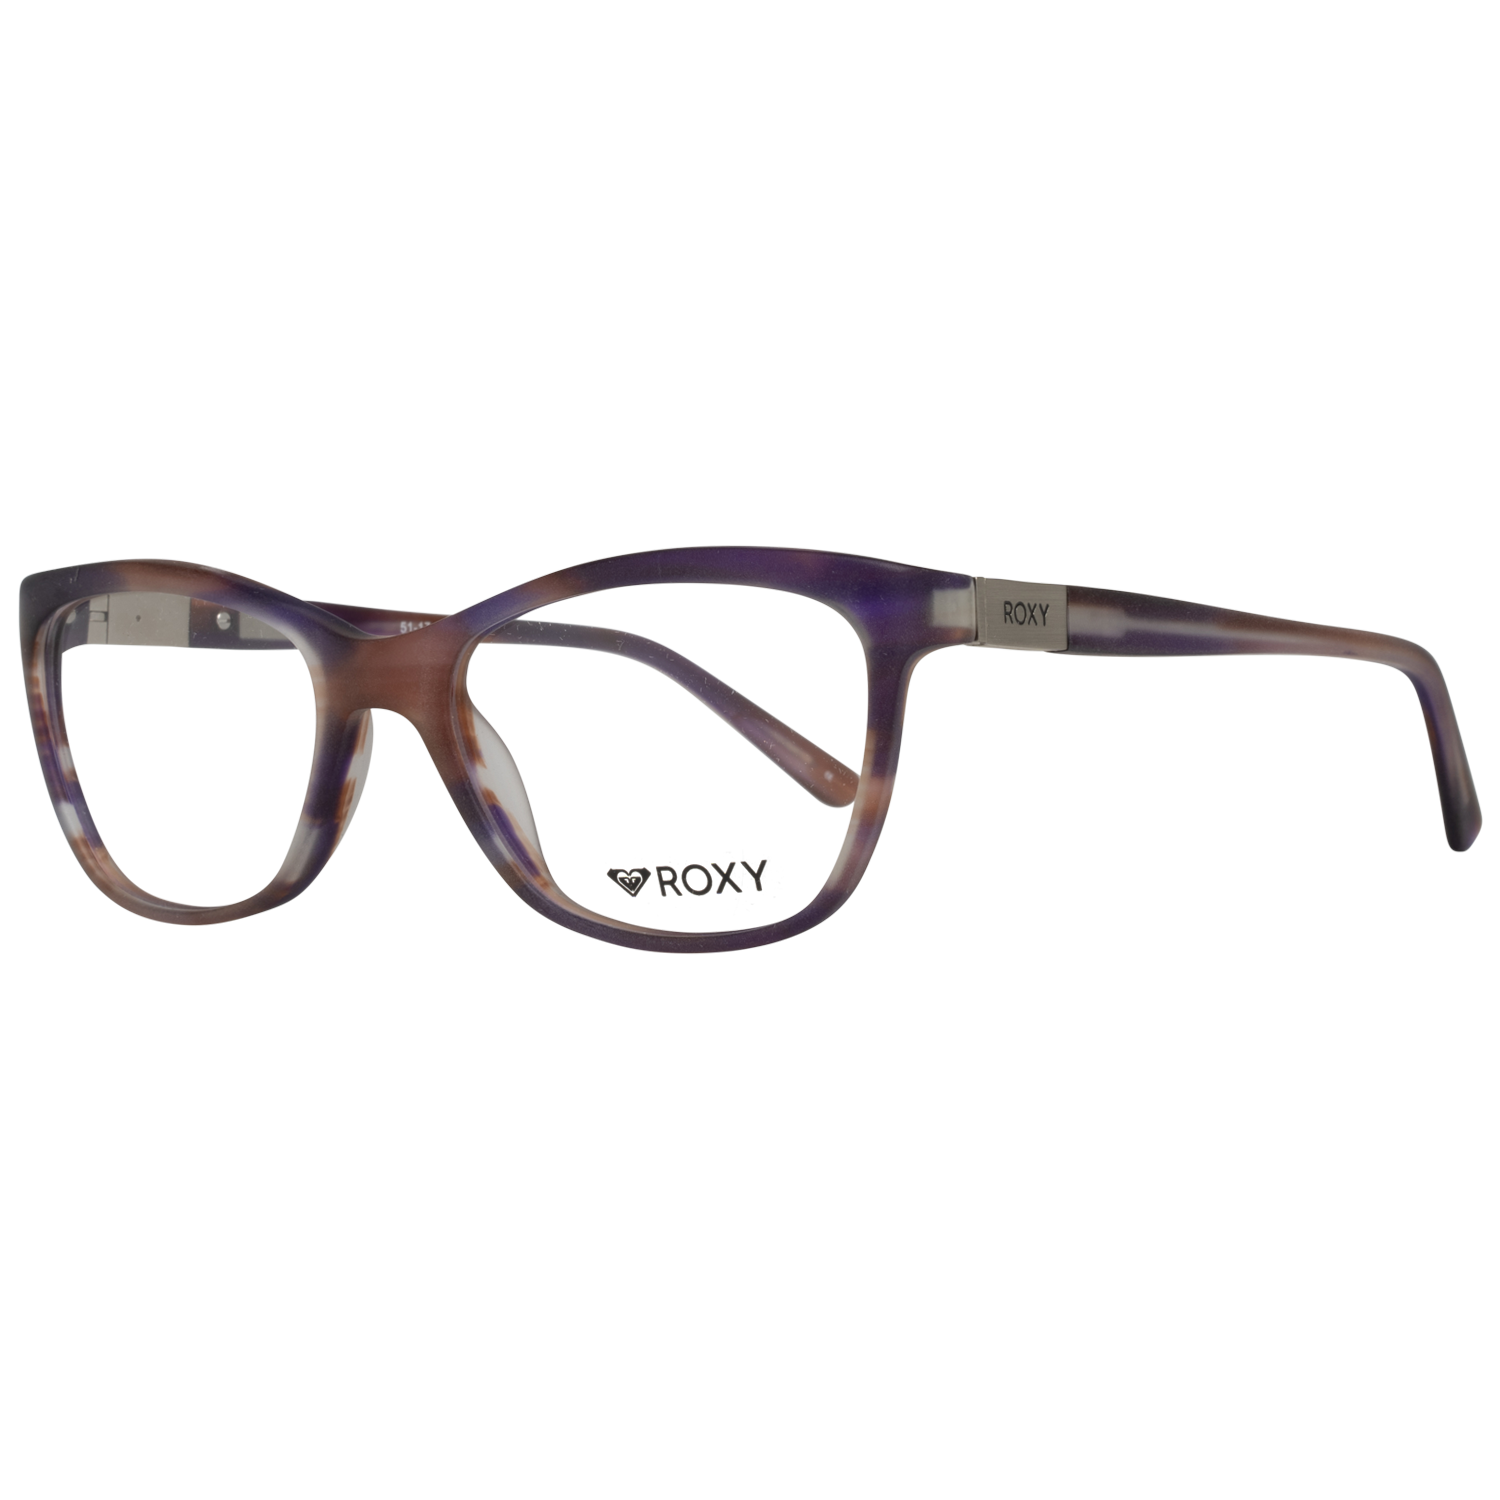 Roxy Frames Roxy Glasses Optical Frame ERJEG03025 APUR 51 Eyeglasses Eyewear UK USA Australia 